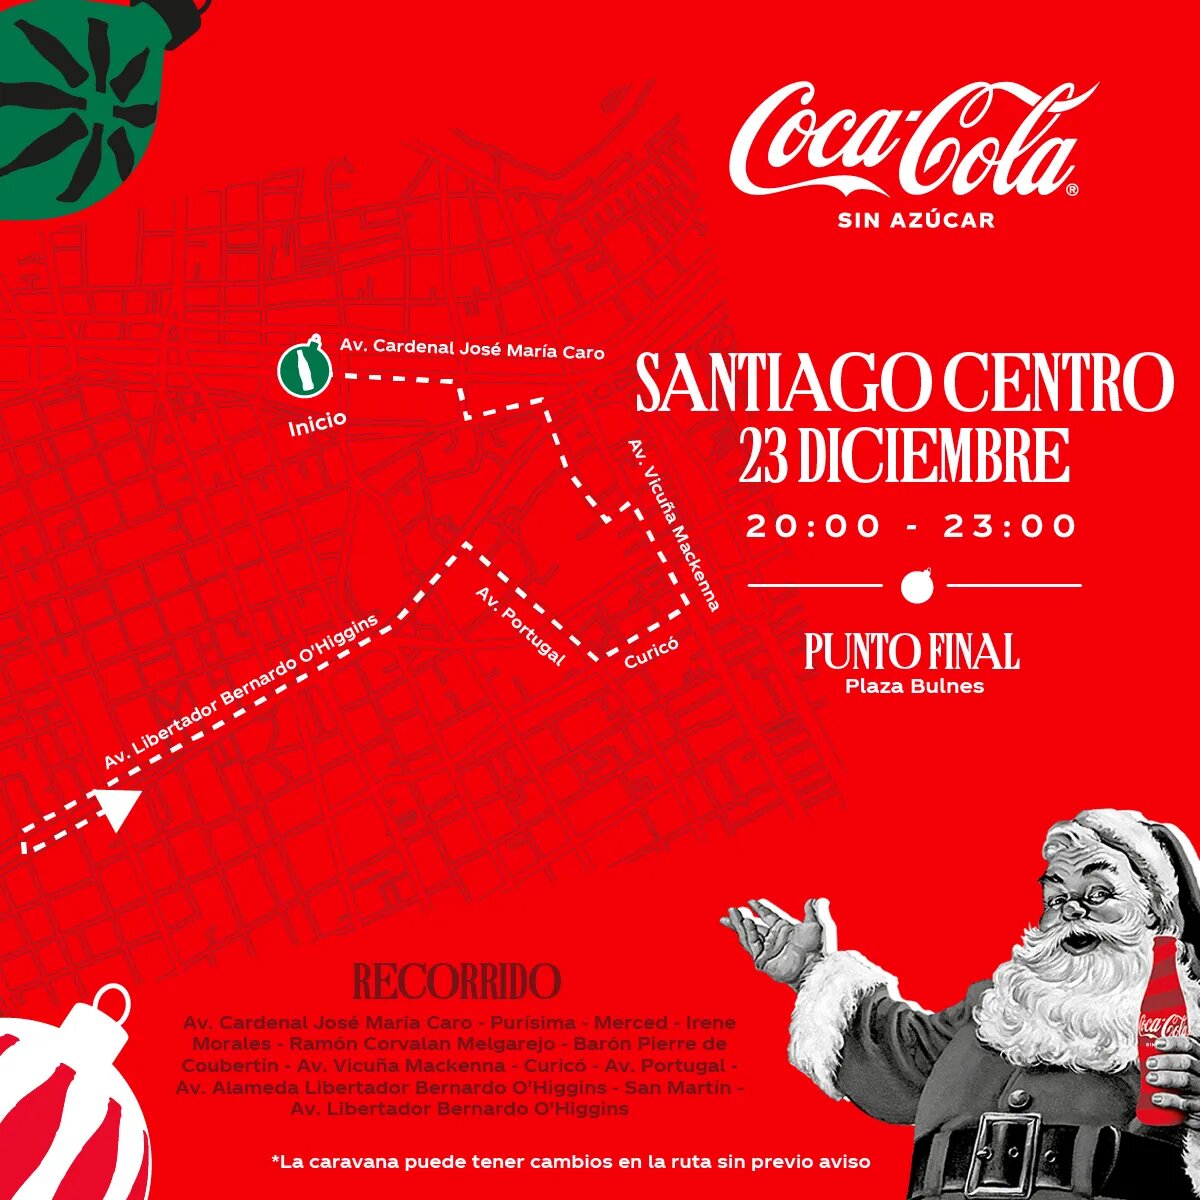 Santiago centro - caravana coca cola